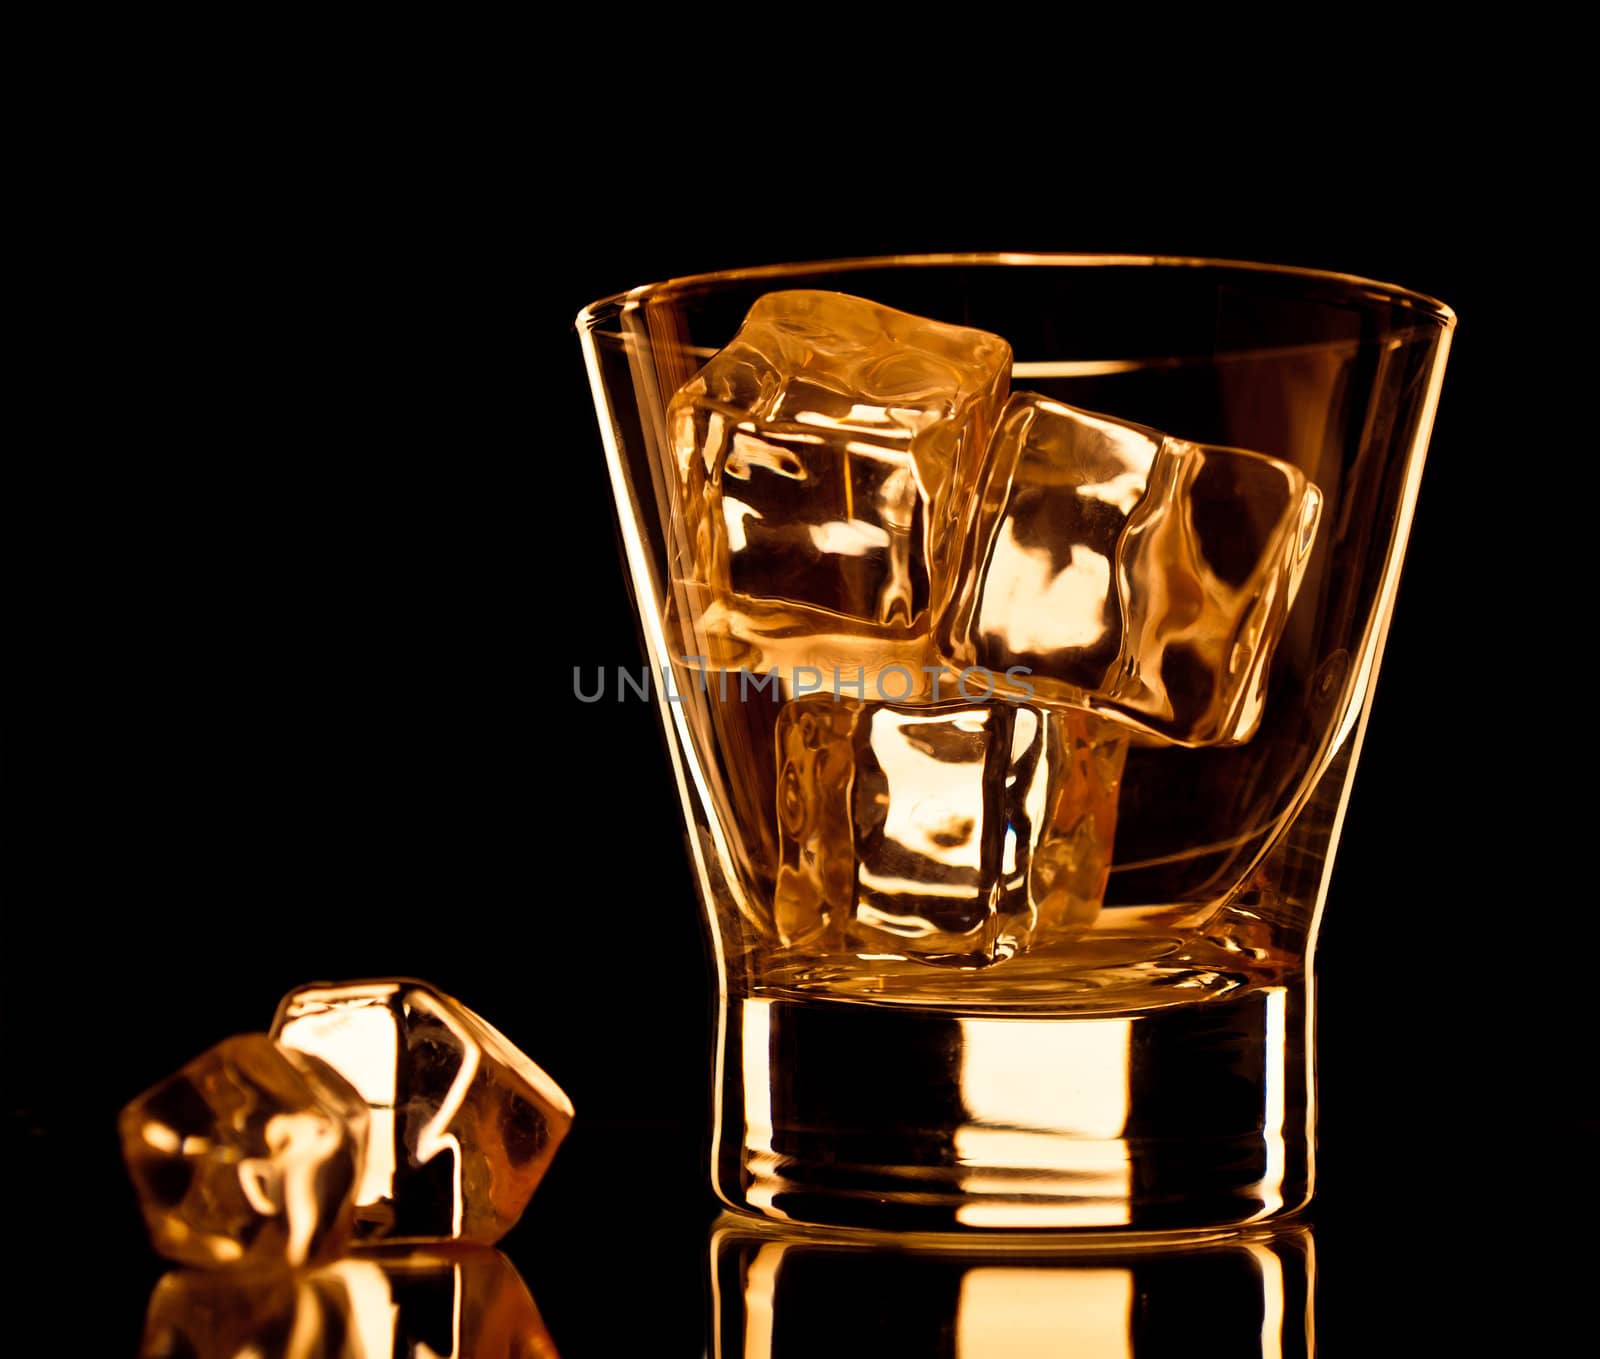 Whiskey glass by Alex_L